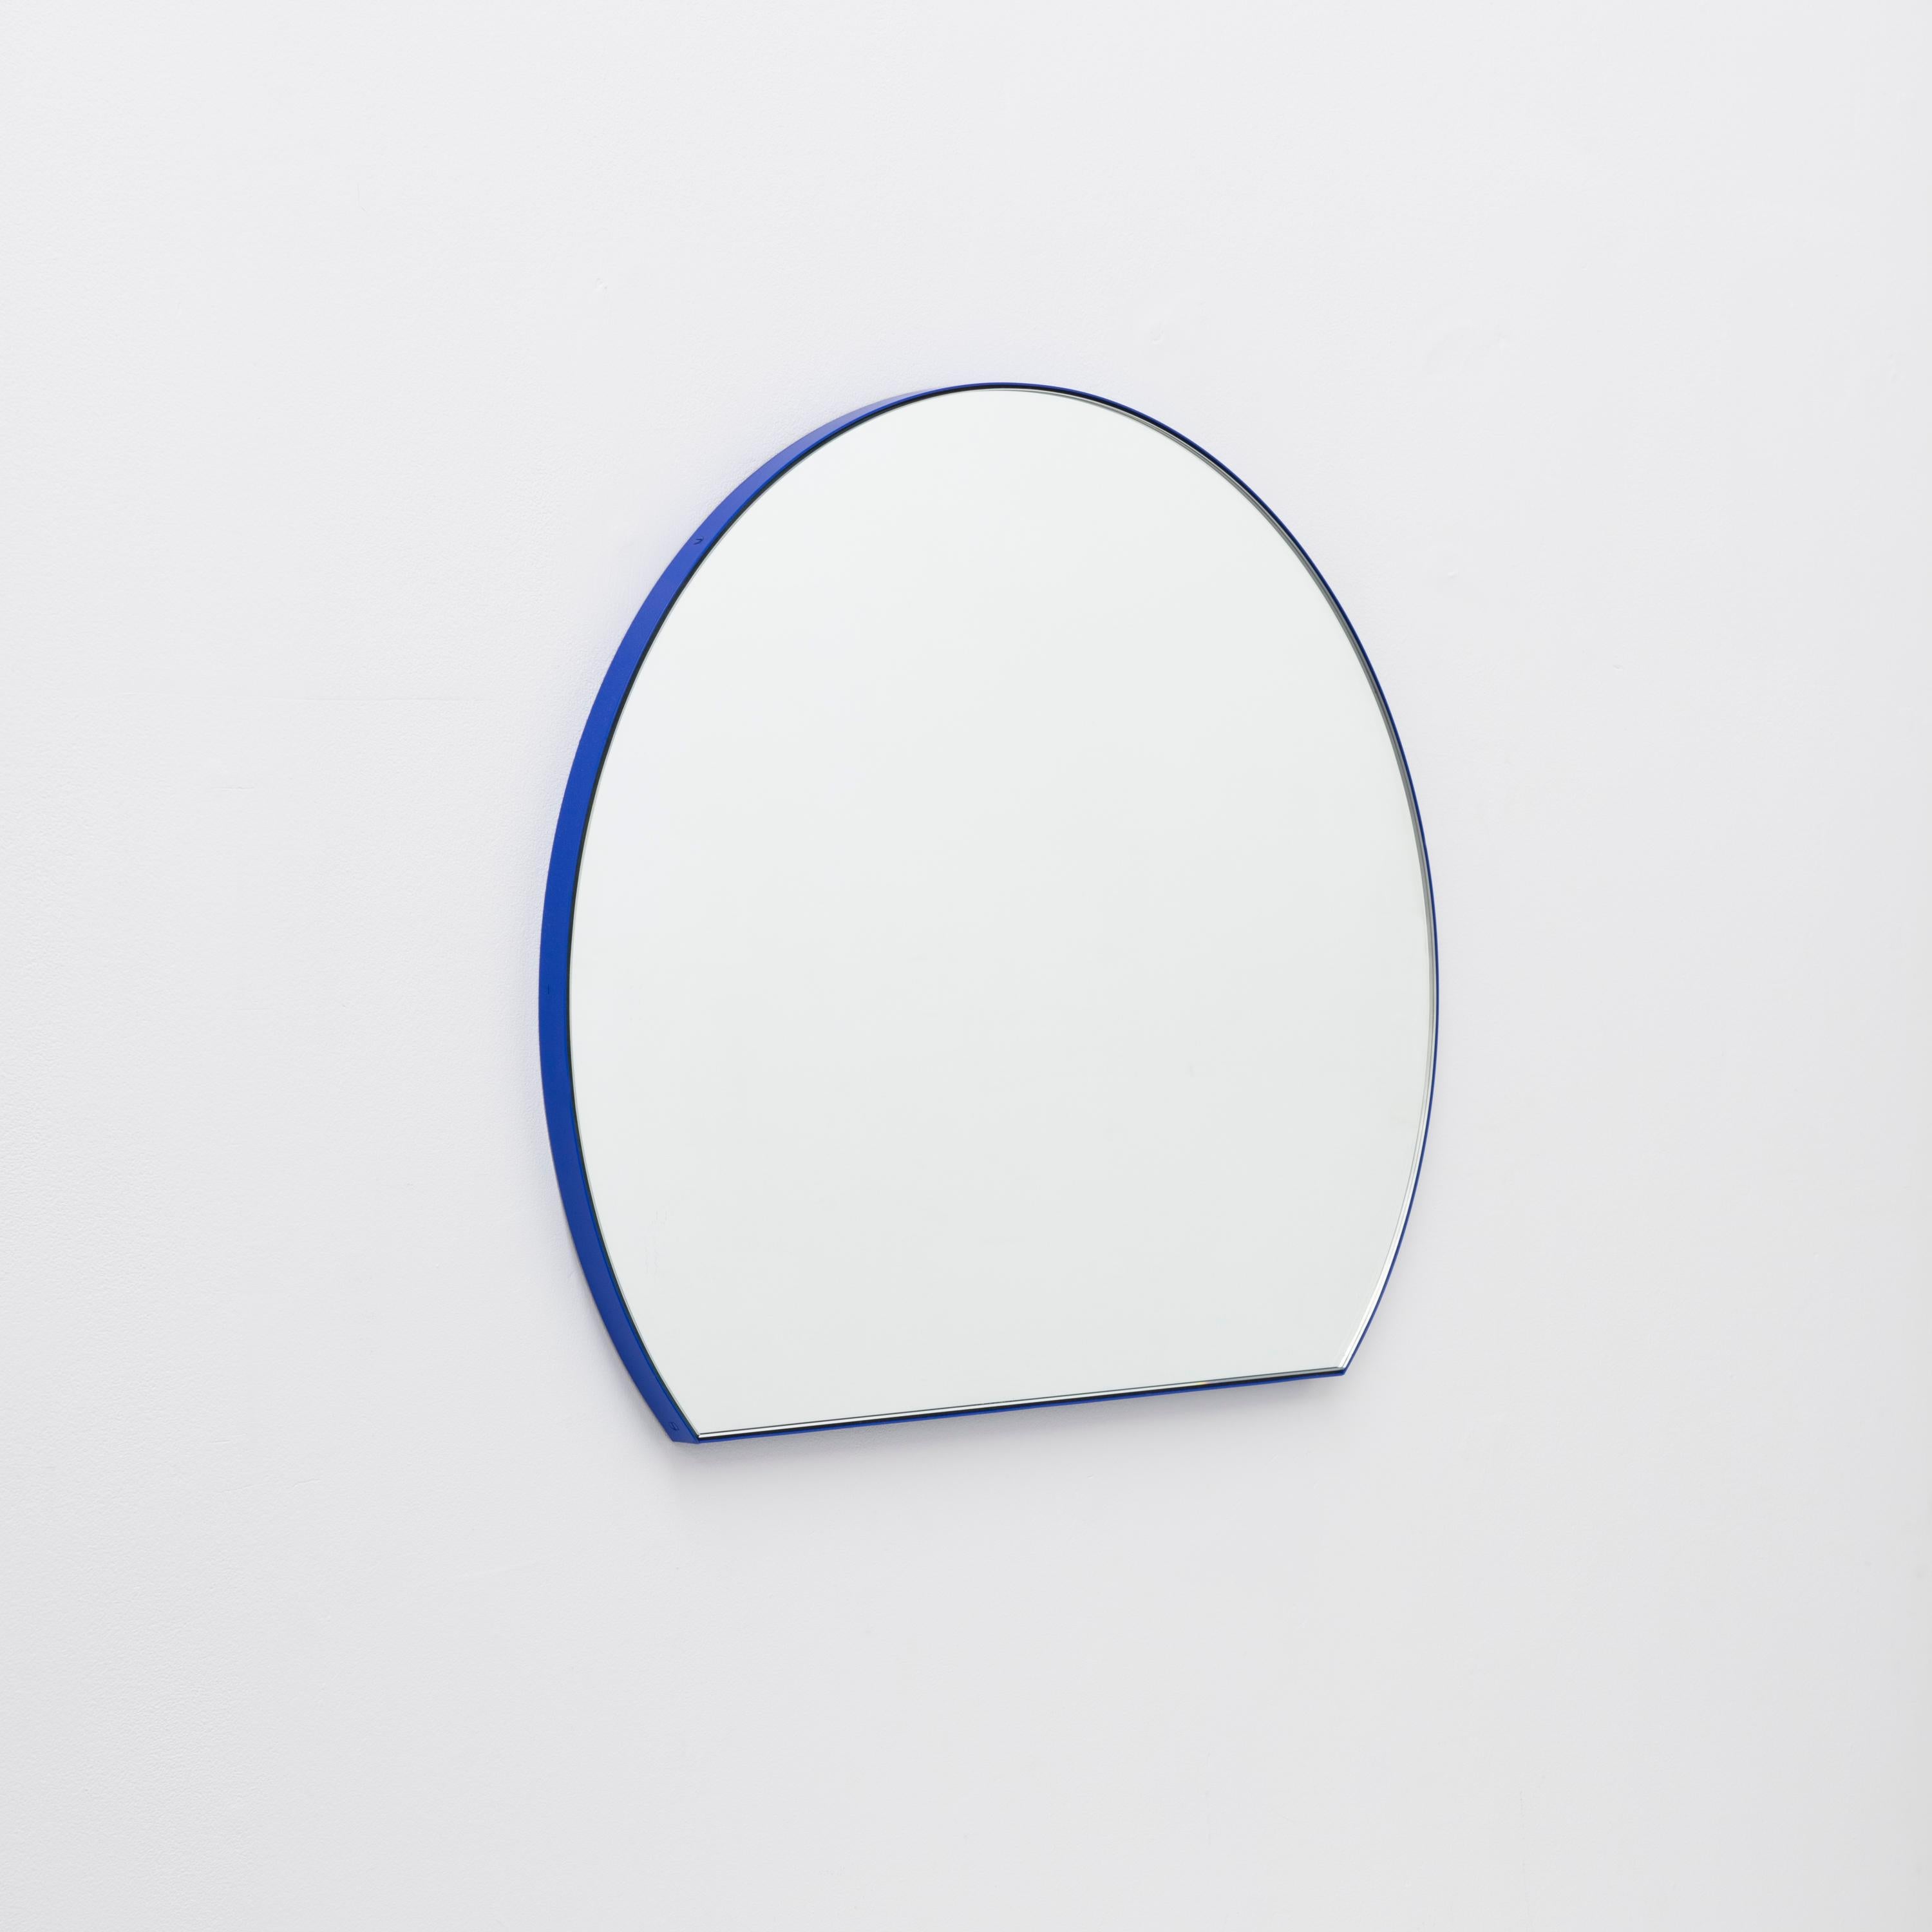 Powder-Coated In Stock Orbis Trecus Cropped Round Modern Mirror, Blue Frame, Medium For Sale